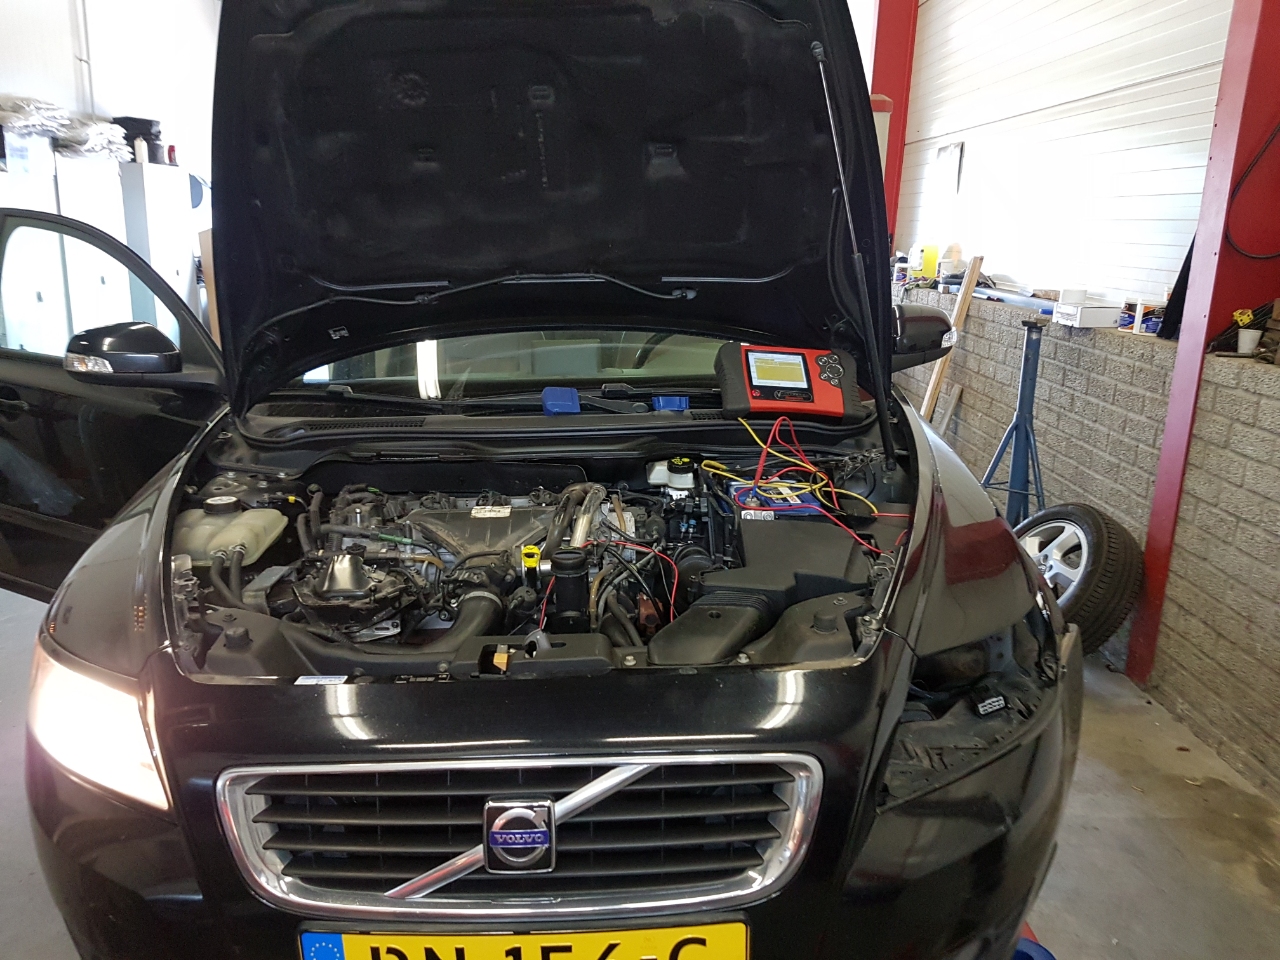 Perth Beurs Roei uit Volvo V50 laad niet bij | Autodiagnose Nederland